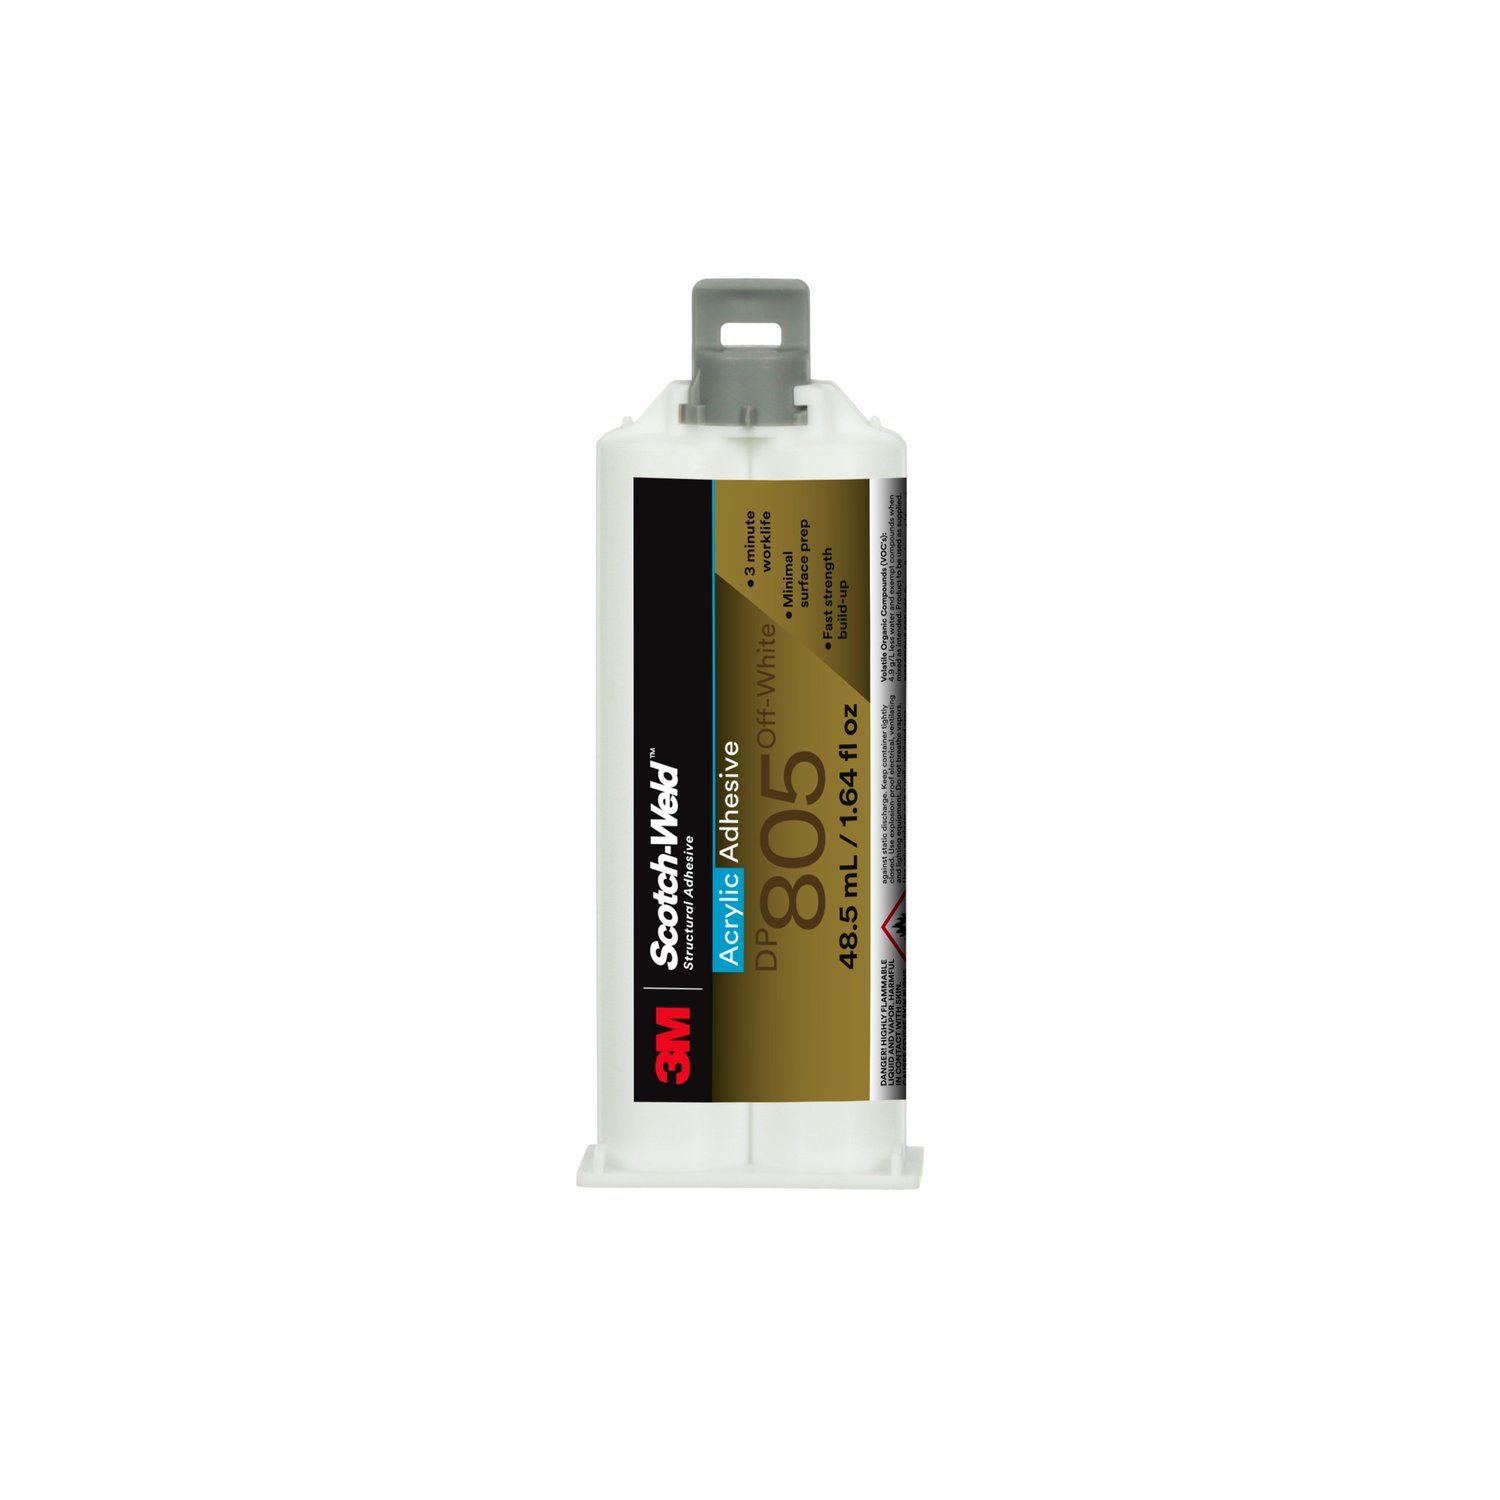 7010410436 - 3M Scotch-Weld Acrylic Adhesive DP805, Off-White, 48.5 mL Duo-Pak,
12/Case